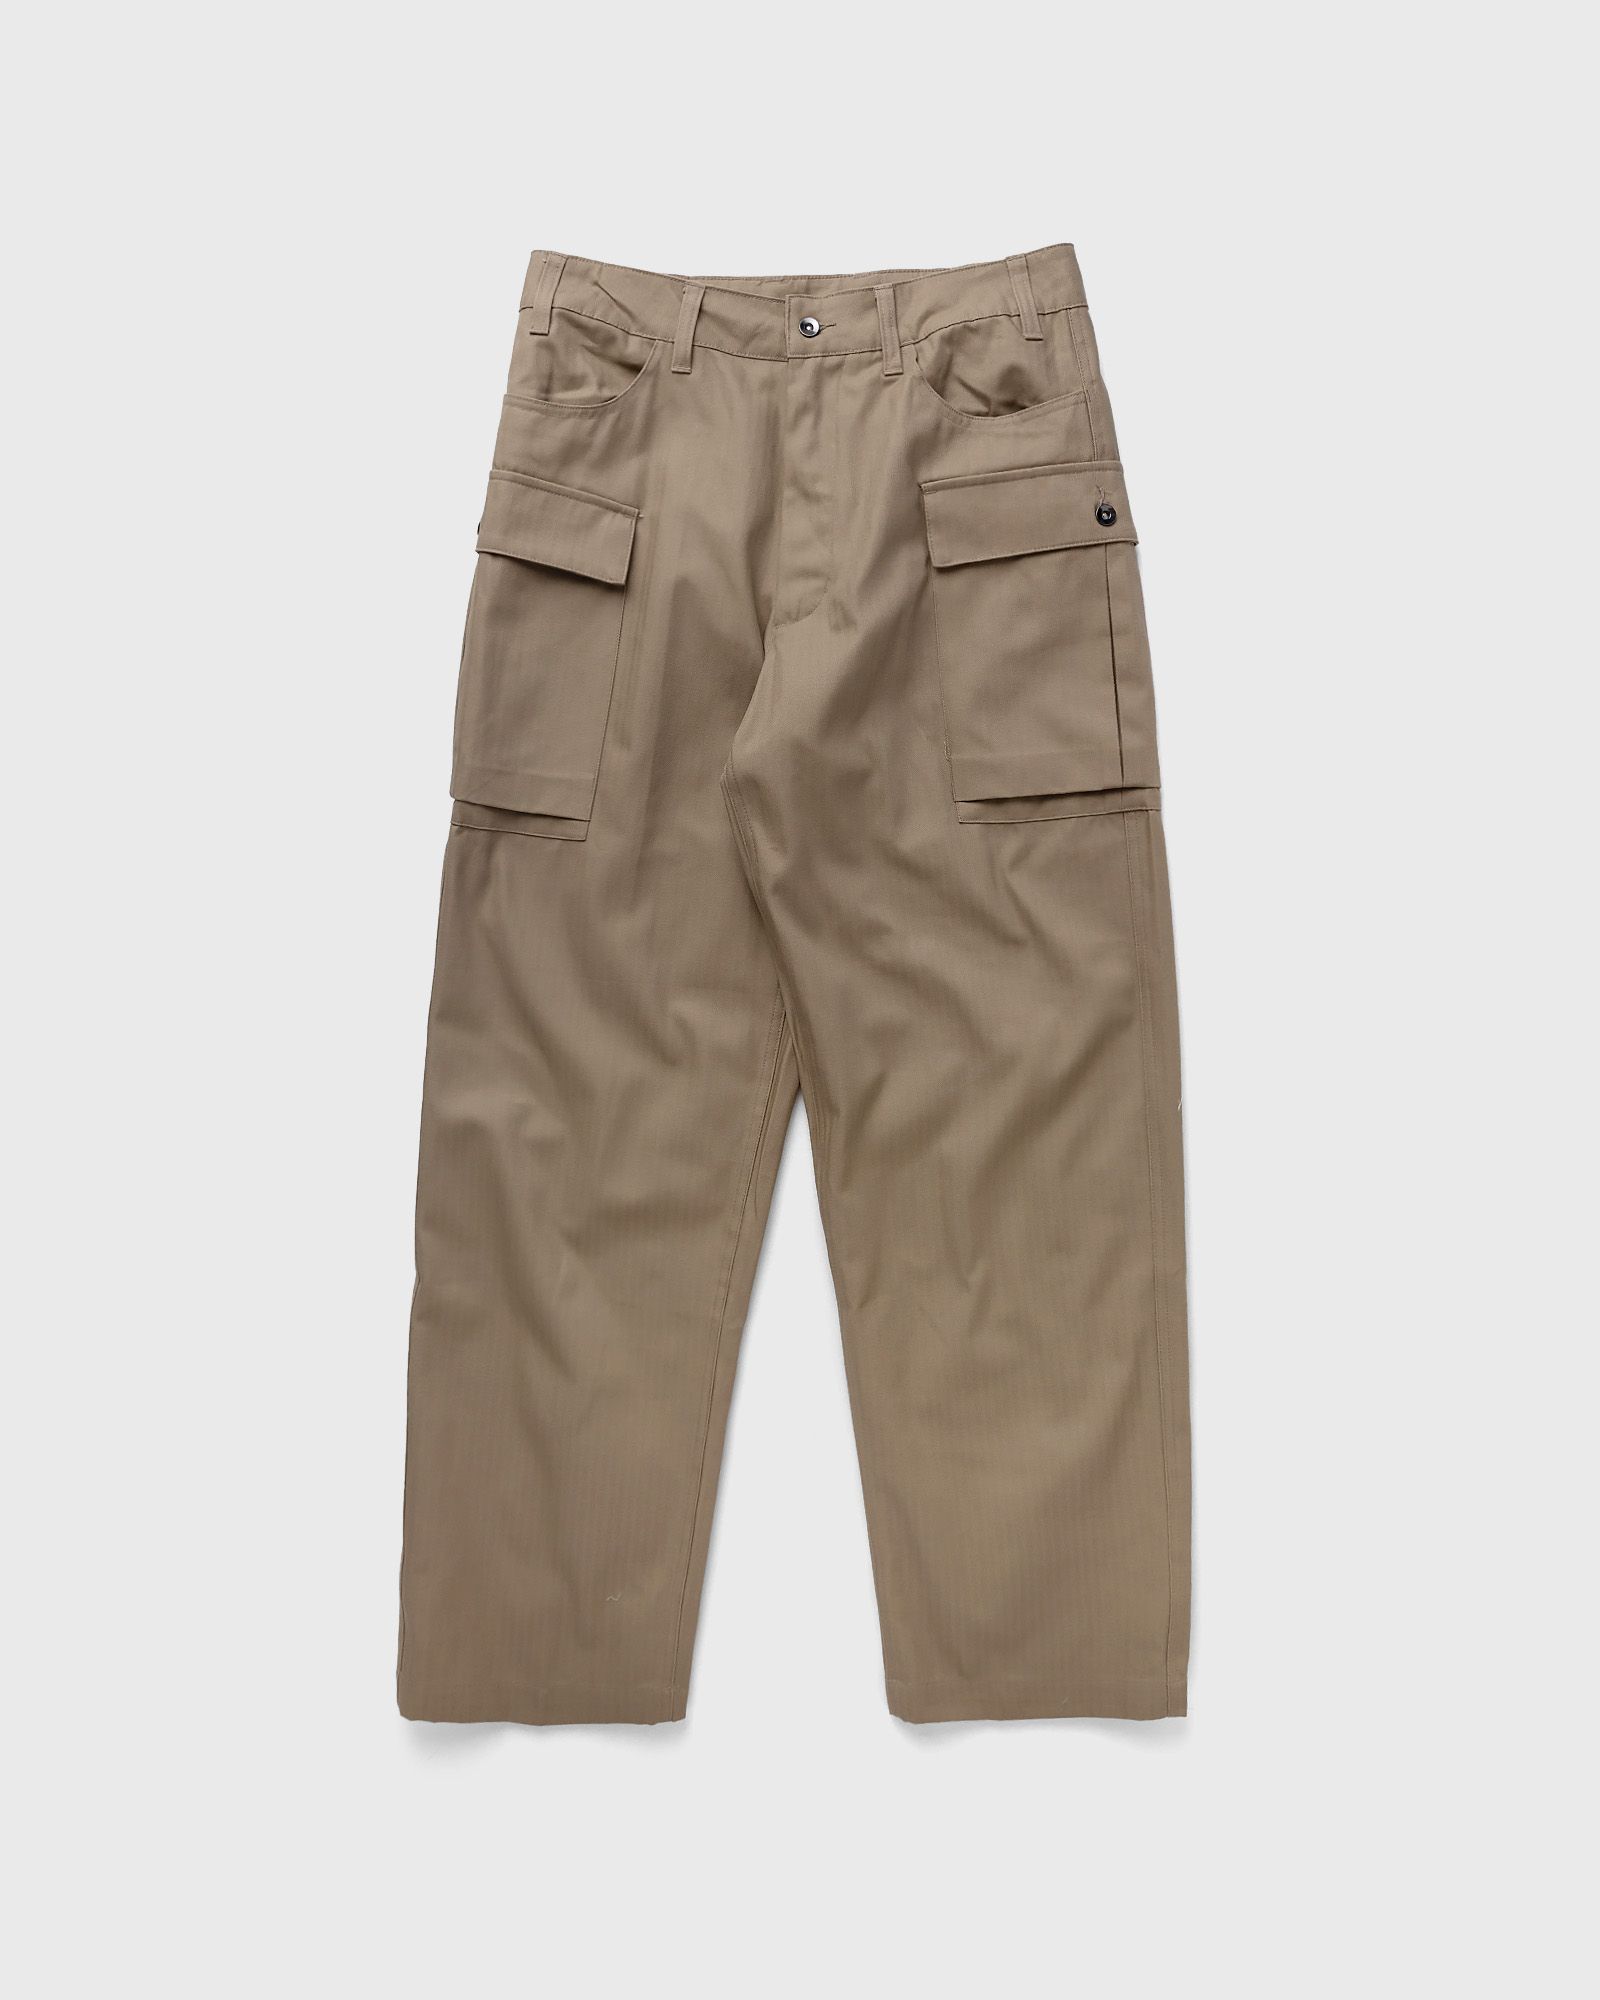 Nike - life men's cargo pants men cargo pants brown in größe:3xl